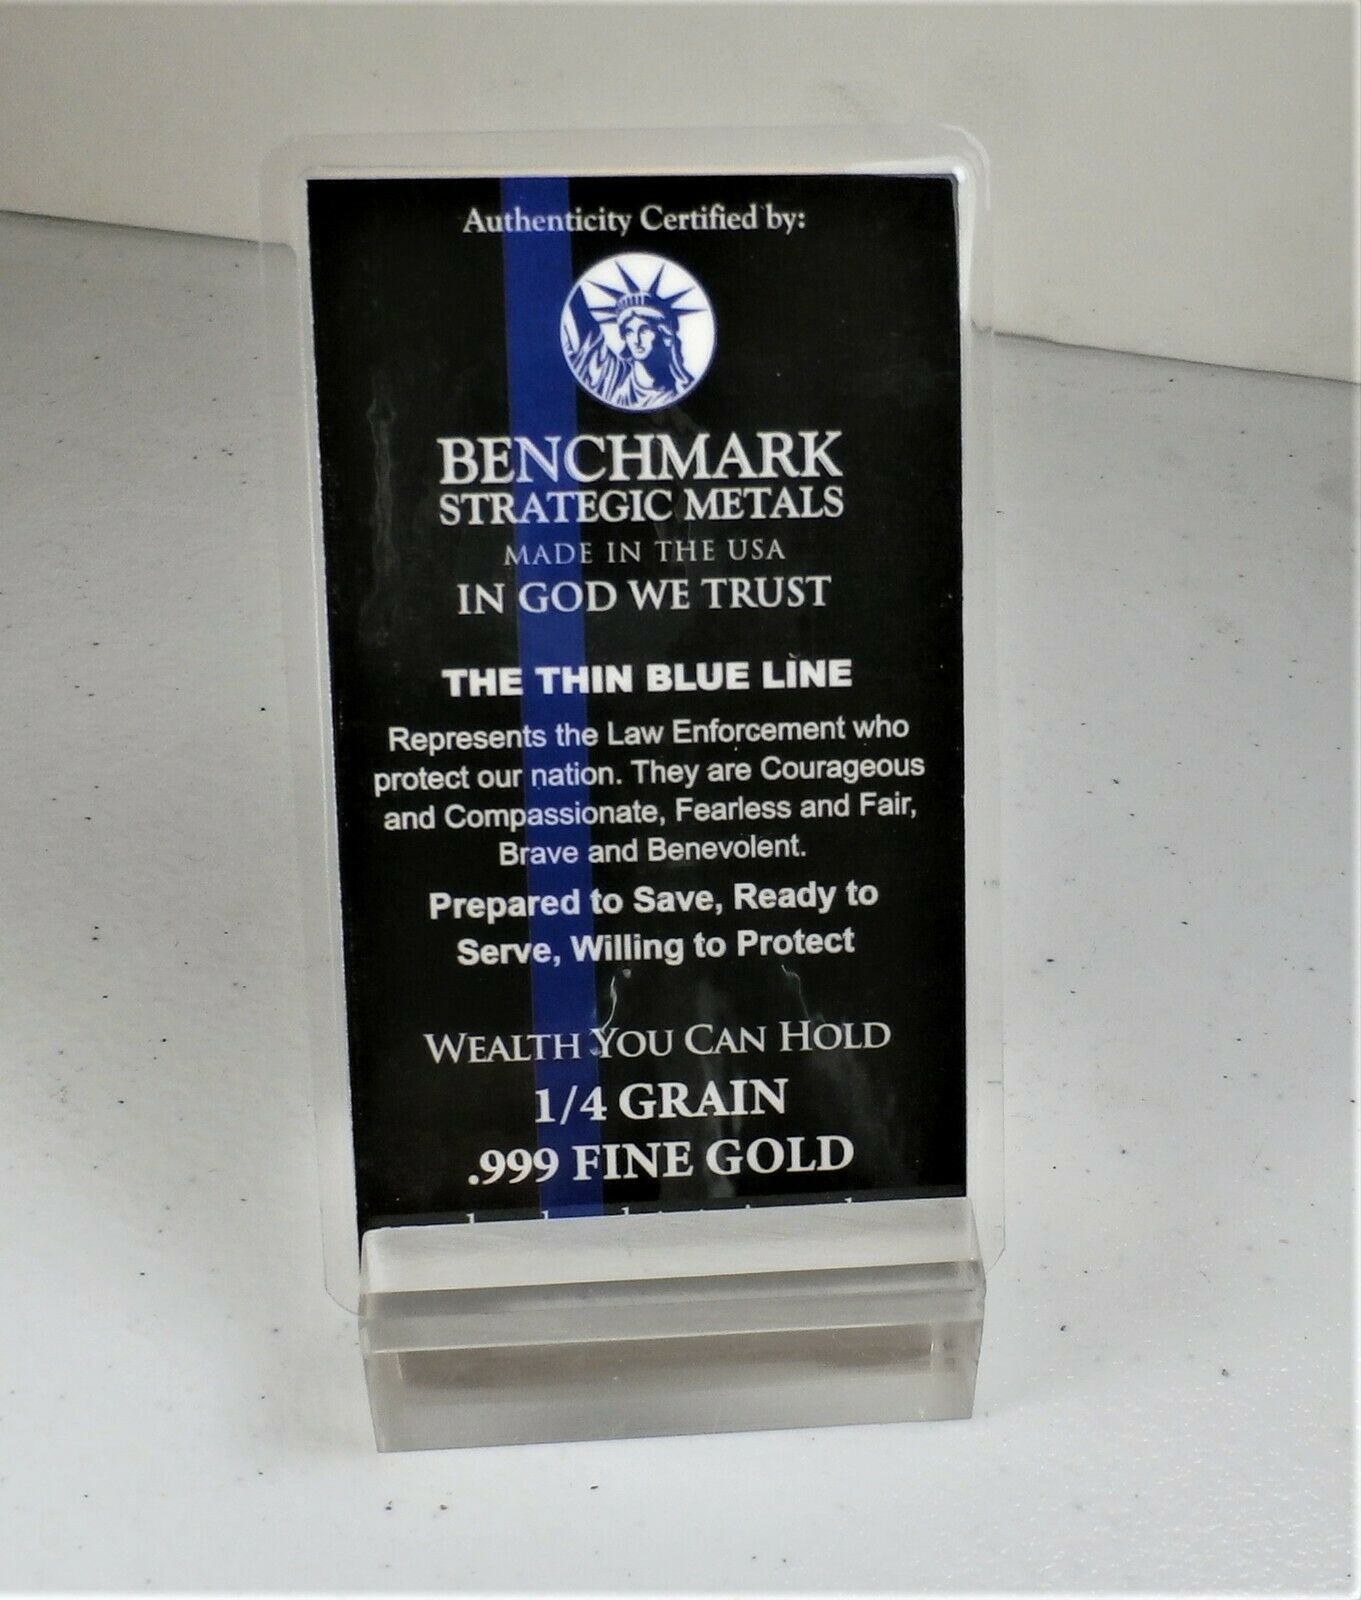 LOT 5 X 1/4 GRAIN .9999 FINE 24K GOLD BULLION BAR “THIN BLUE LINE LAW ENFORCEMENT” - IN COA CARD